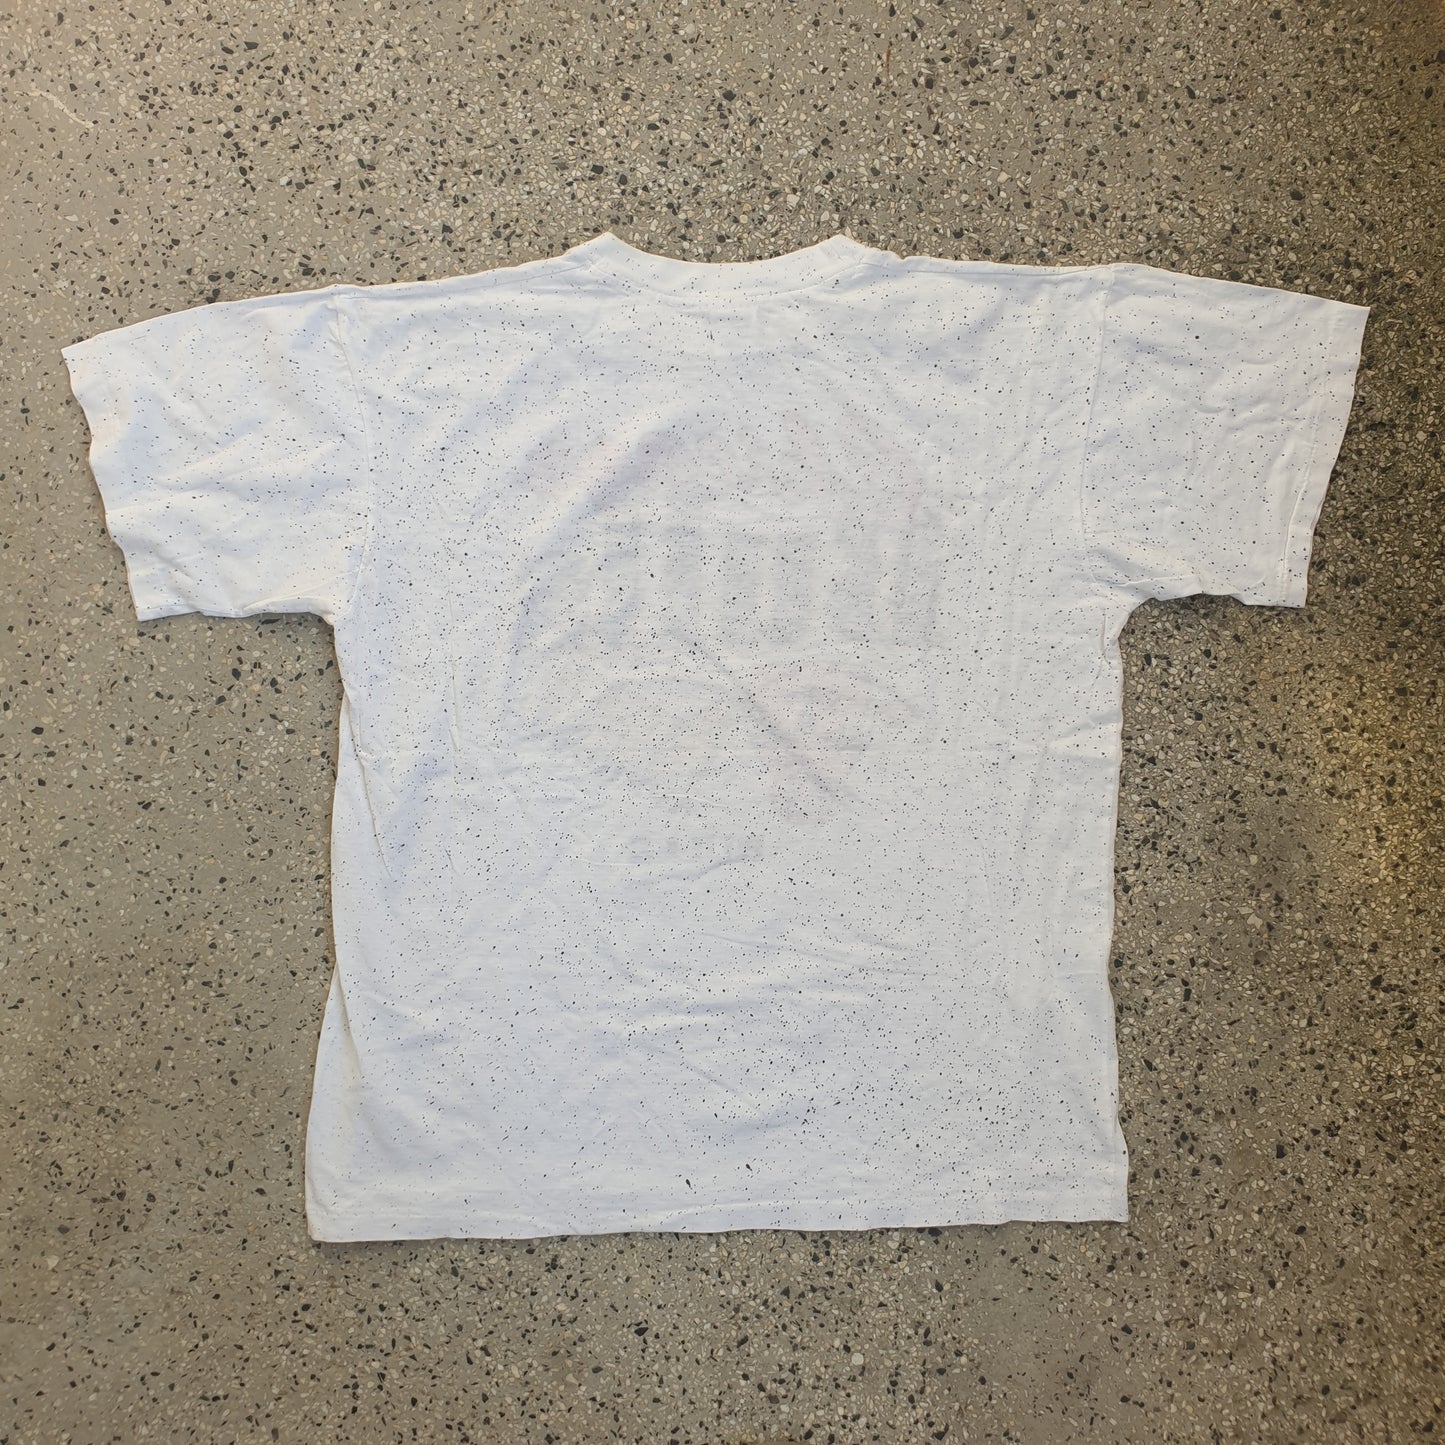 Vintage Chicago Bulls Single Stitch T-shirt (M)